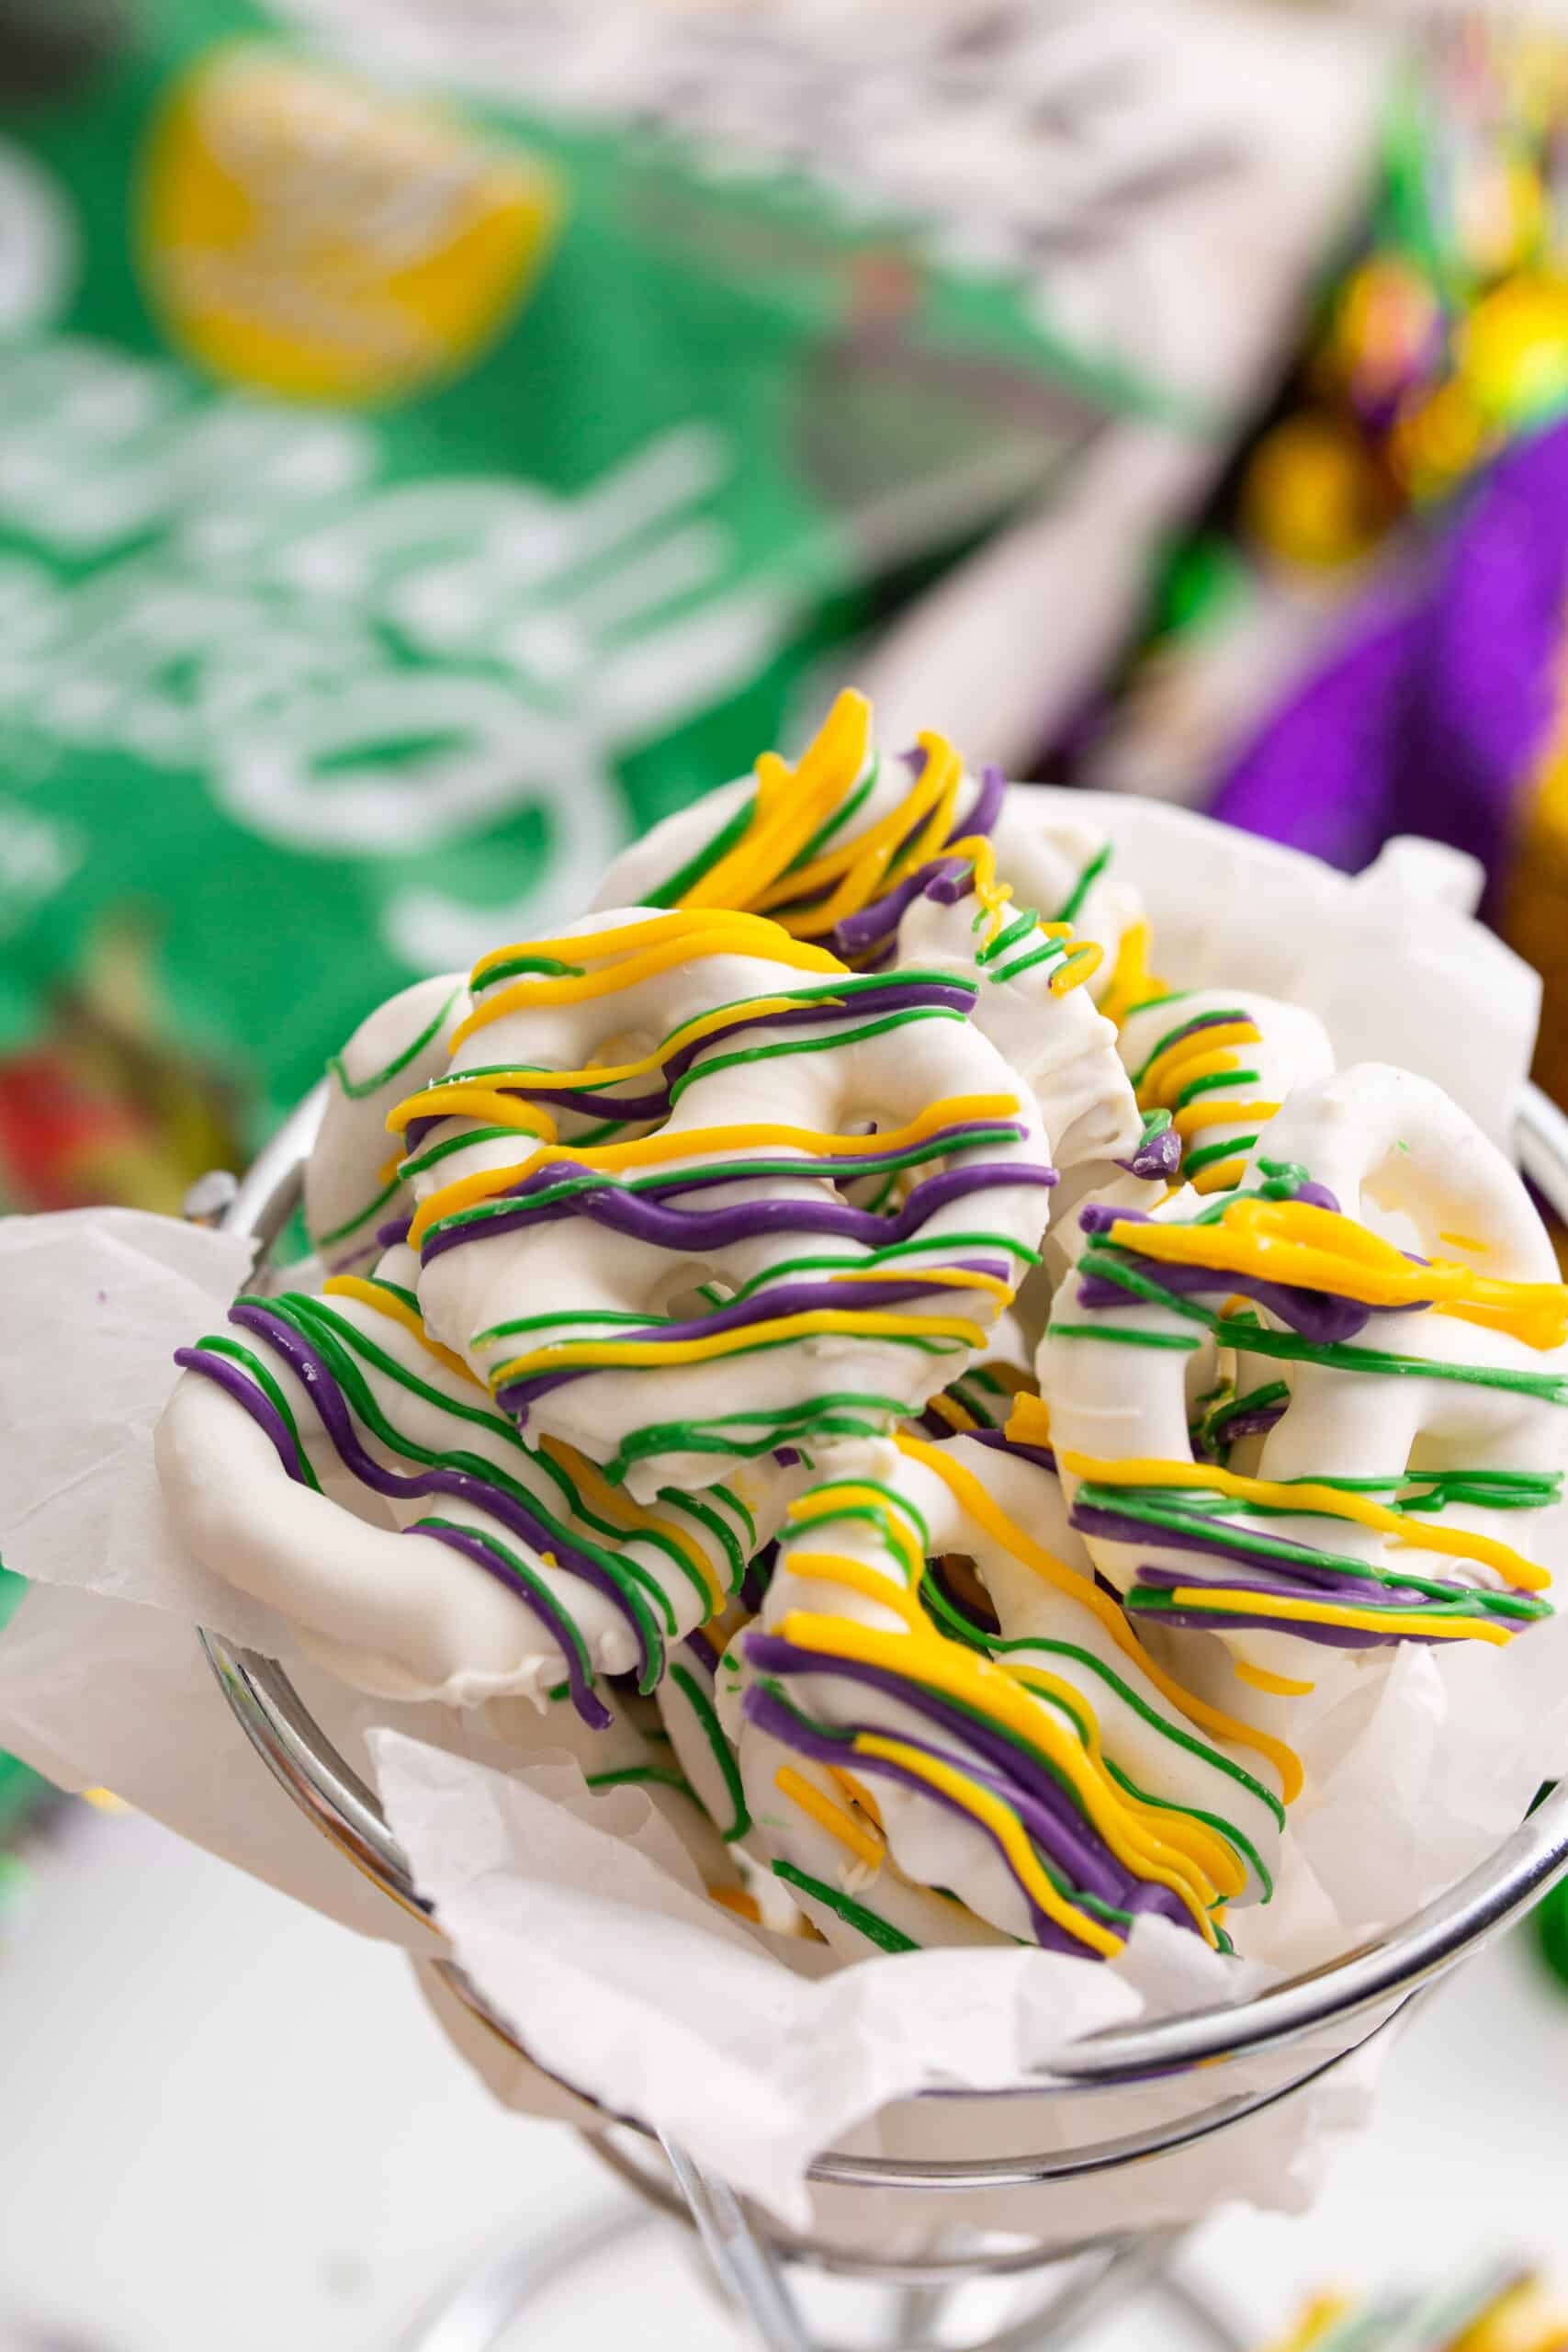 family-friendly Mardi Gras candies: candy melt pretzels